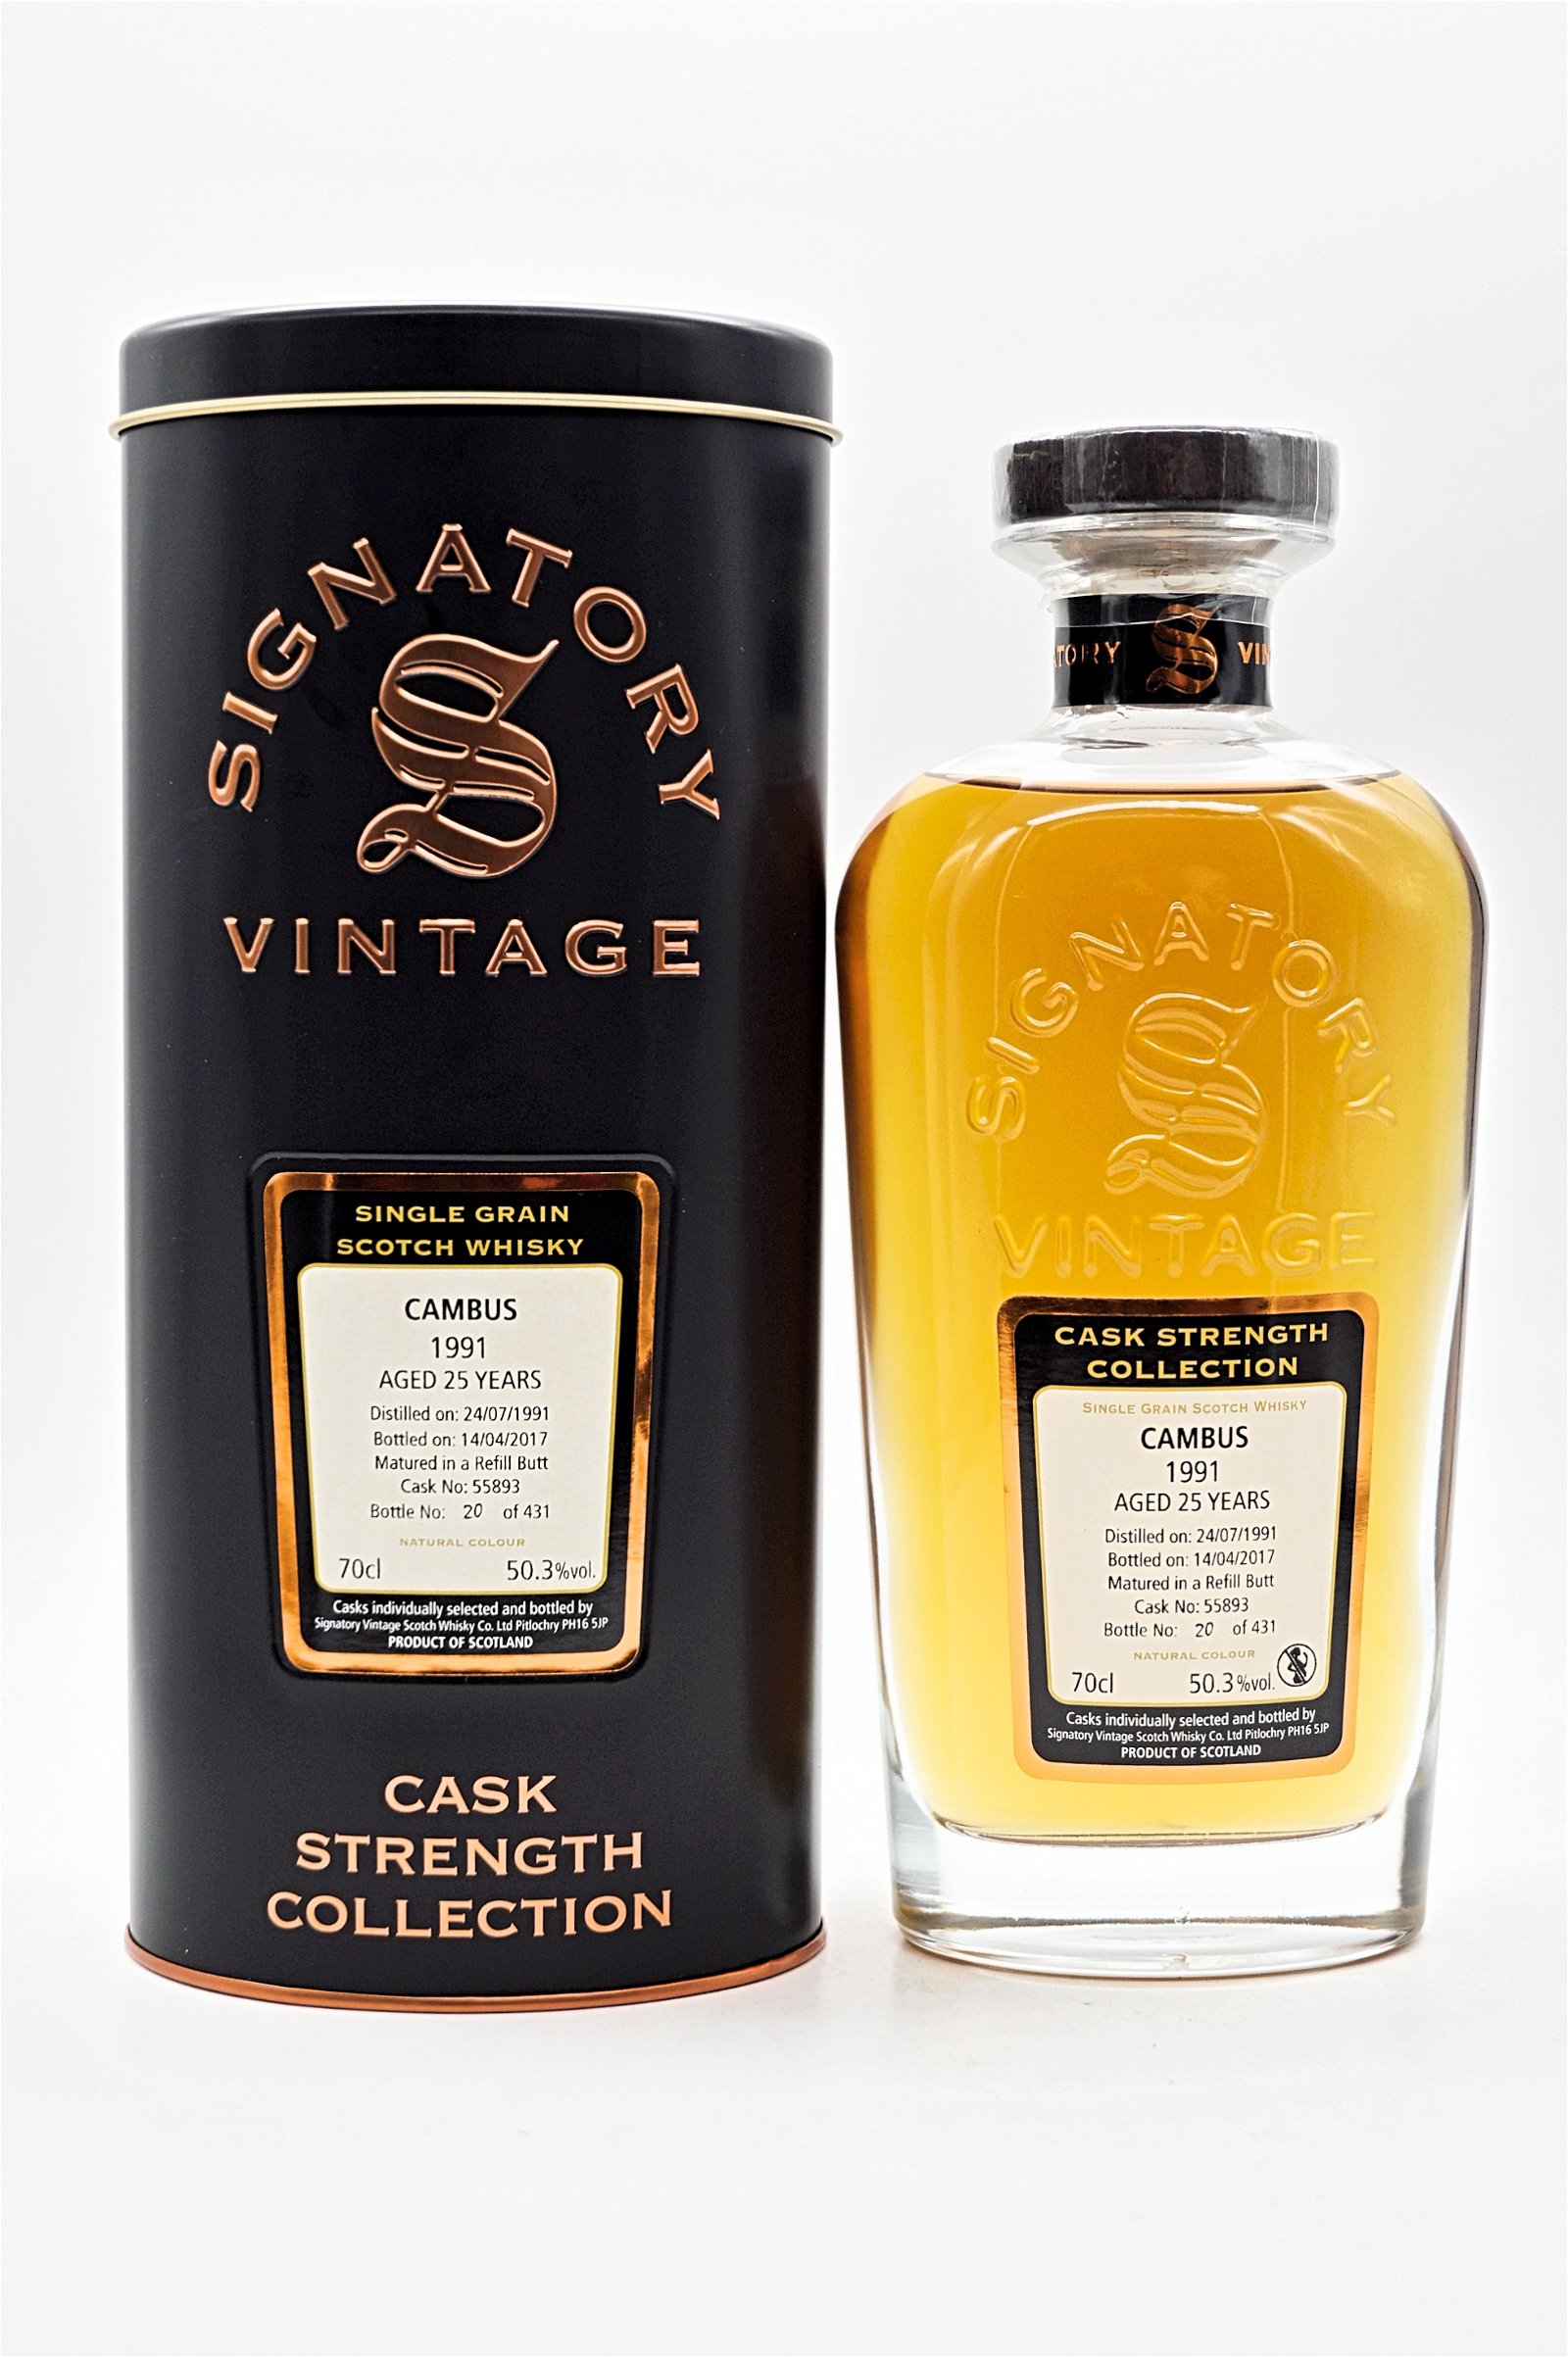 Hepburns Choice Glengoyne 7 Jahre 2007/2014 - 478 F. Single Malt Scotch Whisky